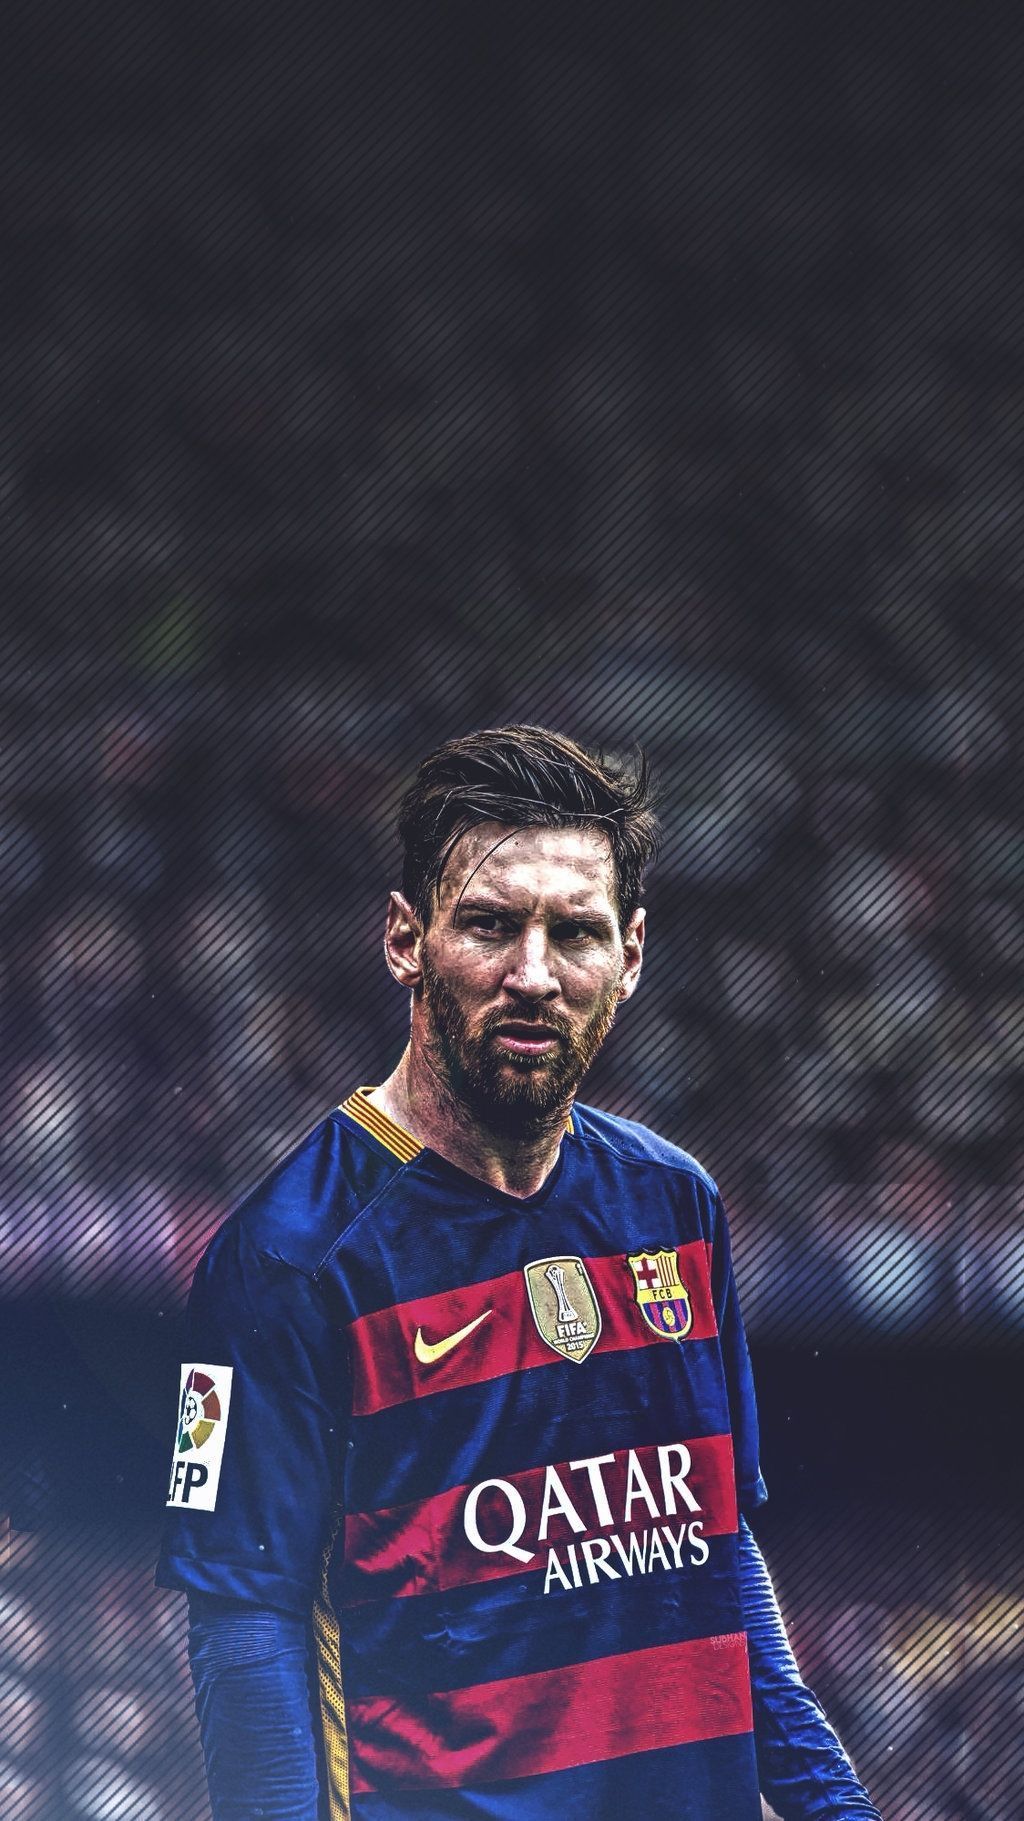  Messi Hintergrundbild 1024x1821. Lionel Messi iPhone Wallpaper Free Lionel Messi iPhone Background